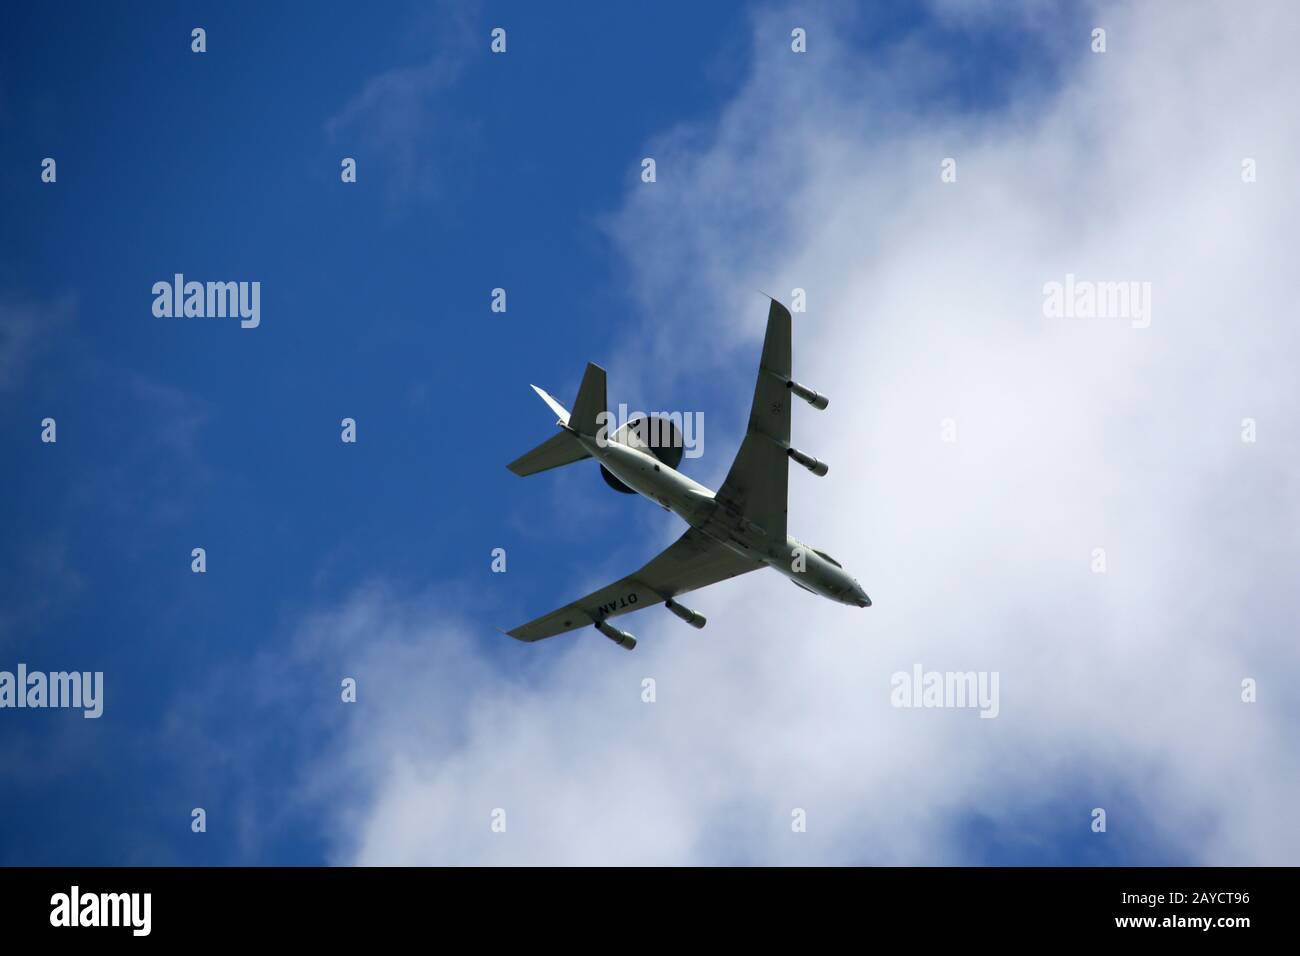 NATO-Flugzeug mit AWACS (Airborne Early Warning and Control System) - Radarsystem Stockfoto